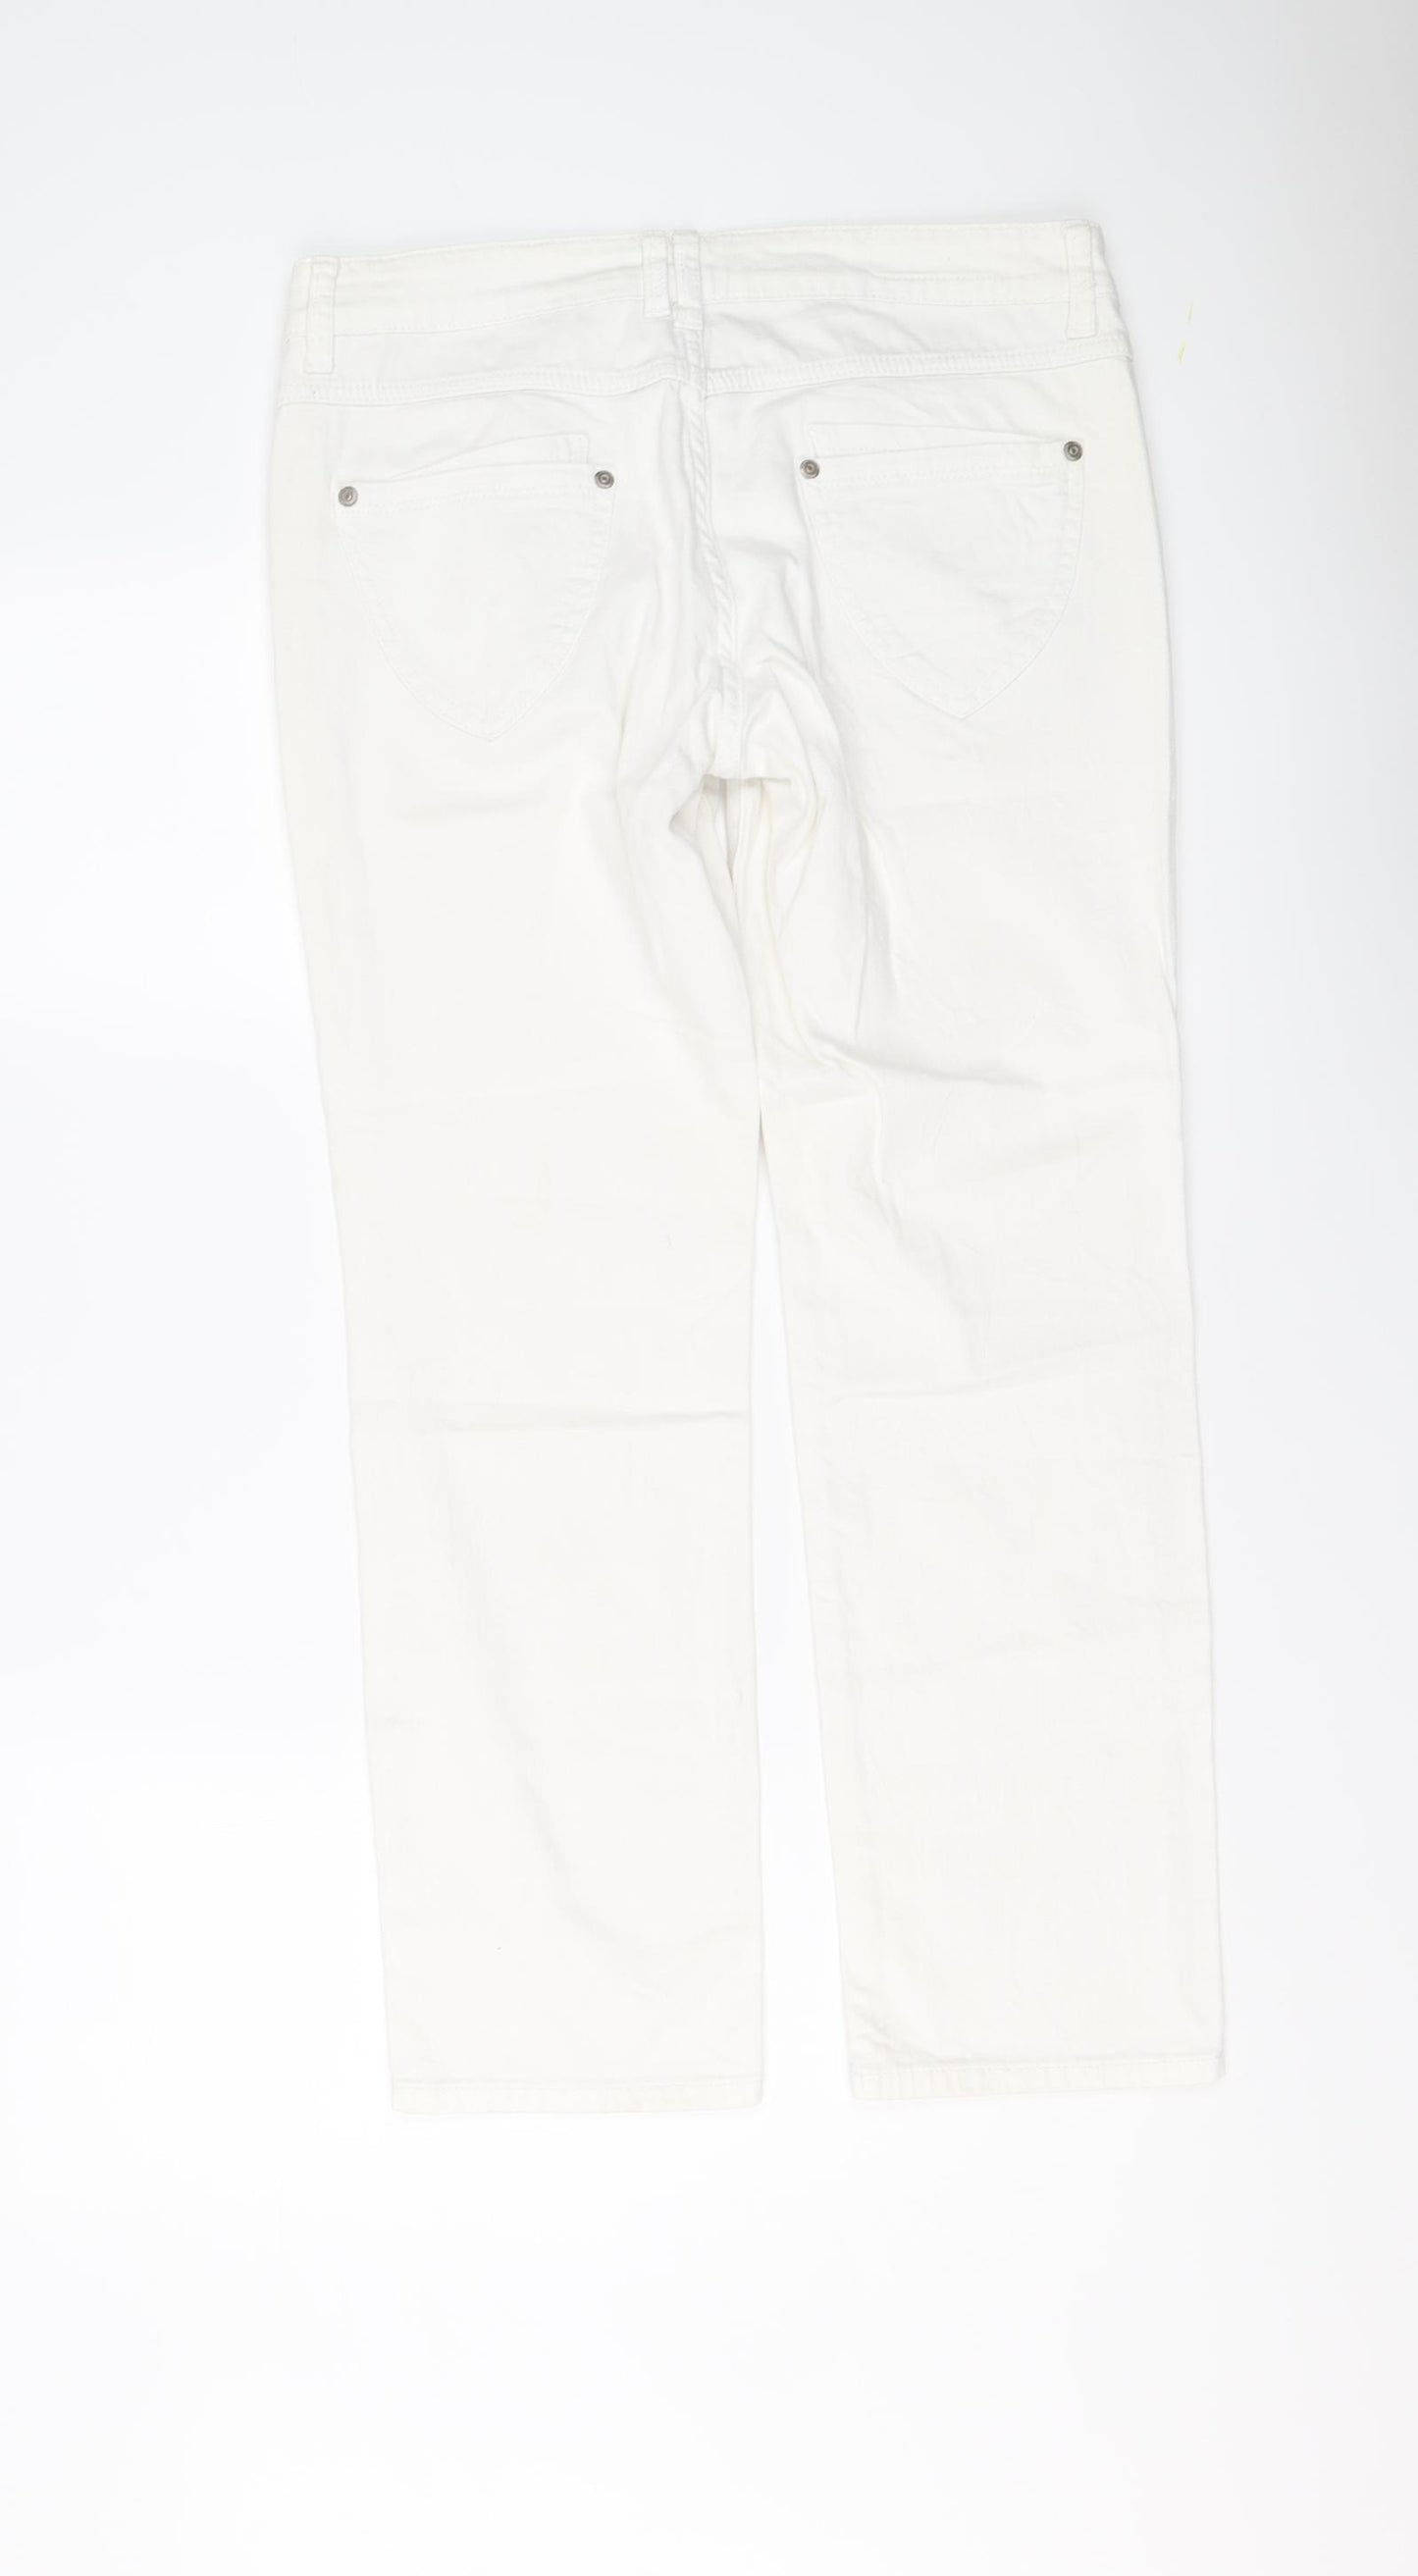 Indigo Womens White Cotton Straight Jeans Size 12 L27 in Regular Button